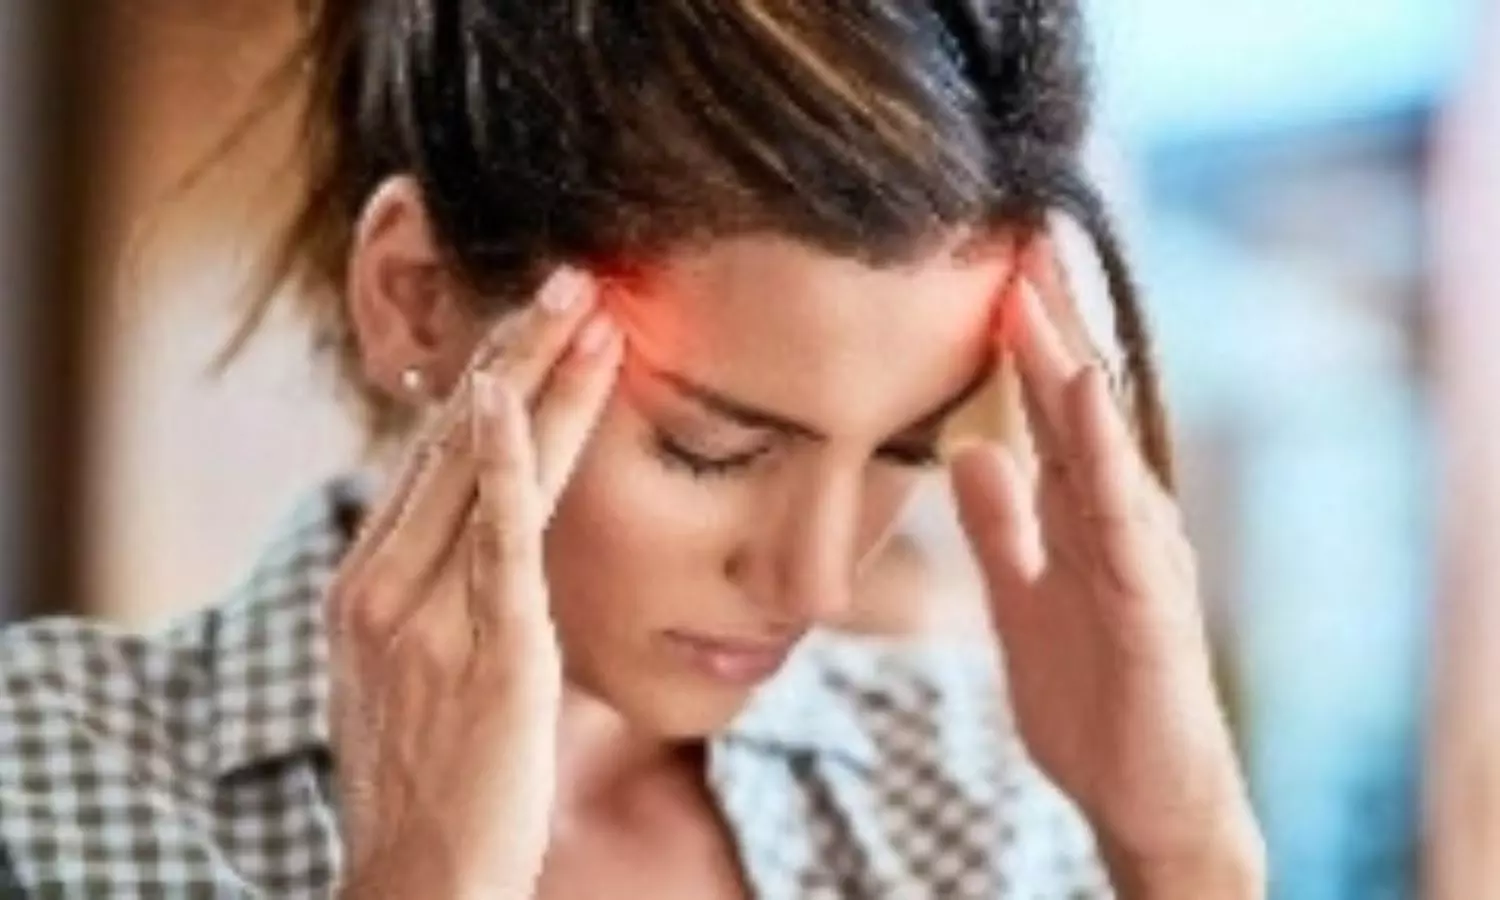 Headache symptoms